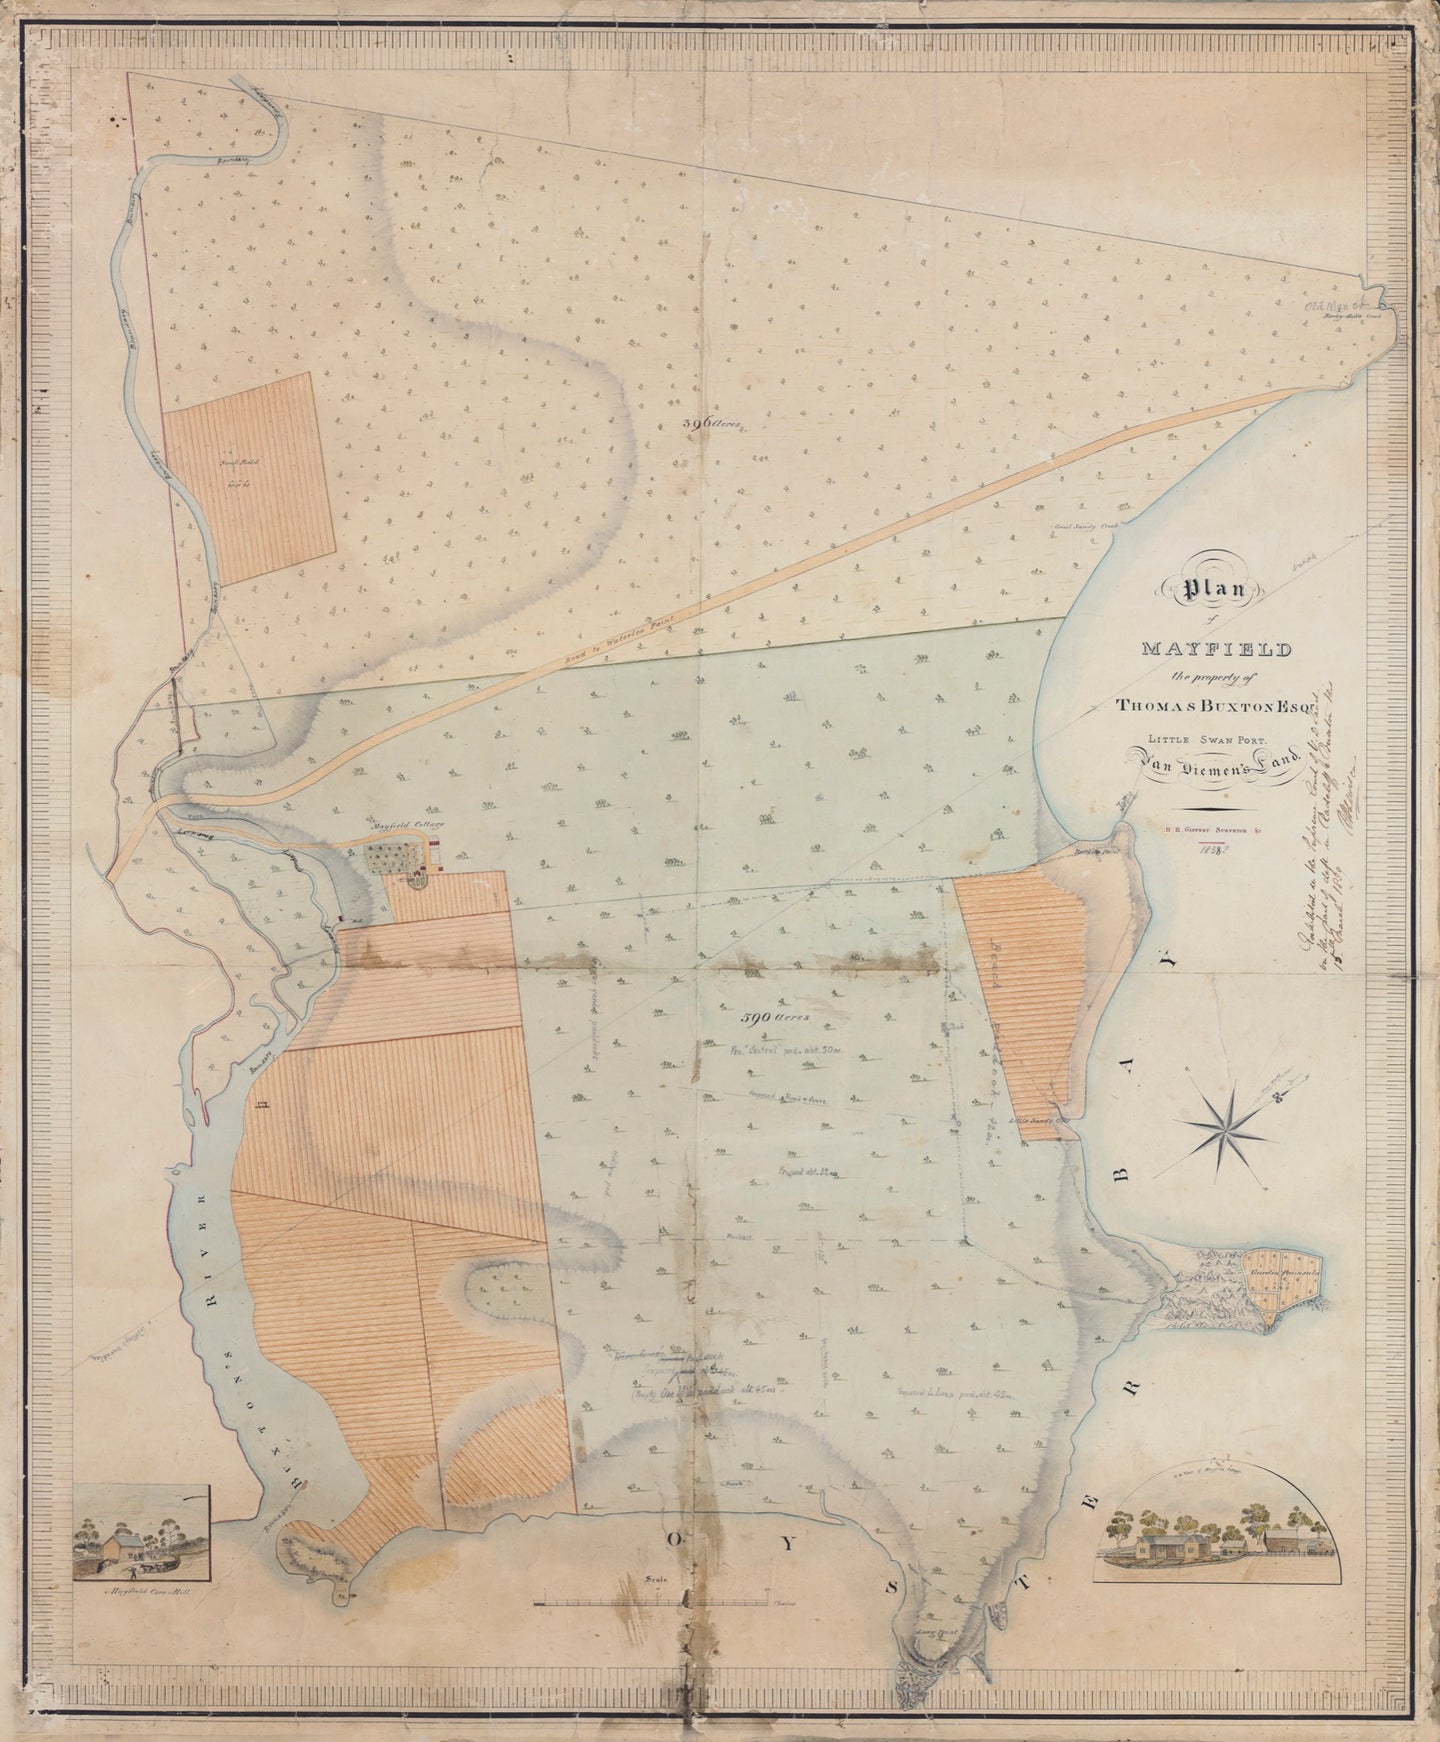 Plan of Mayfield, the property of Thomas Buxton Exqr, Little Swan Port, Van Diemen's Land